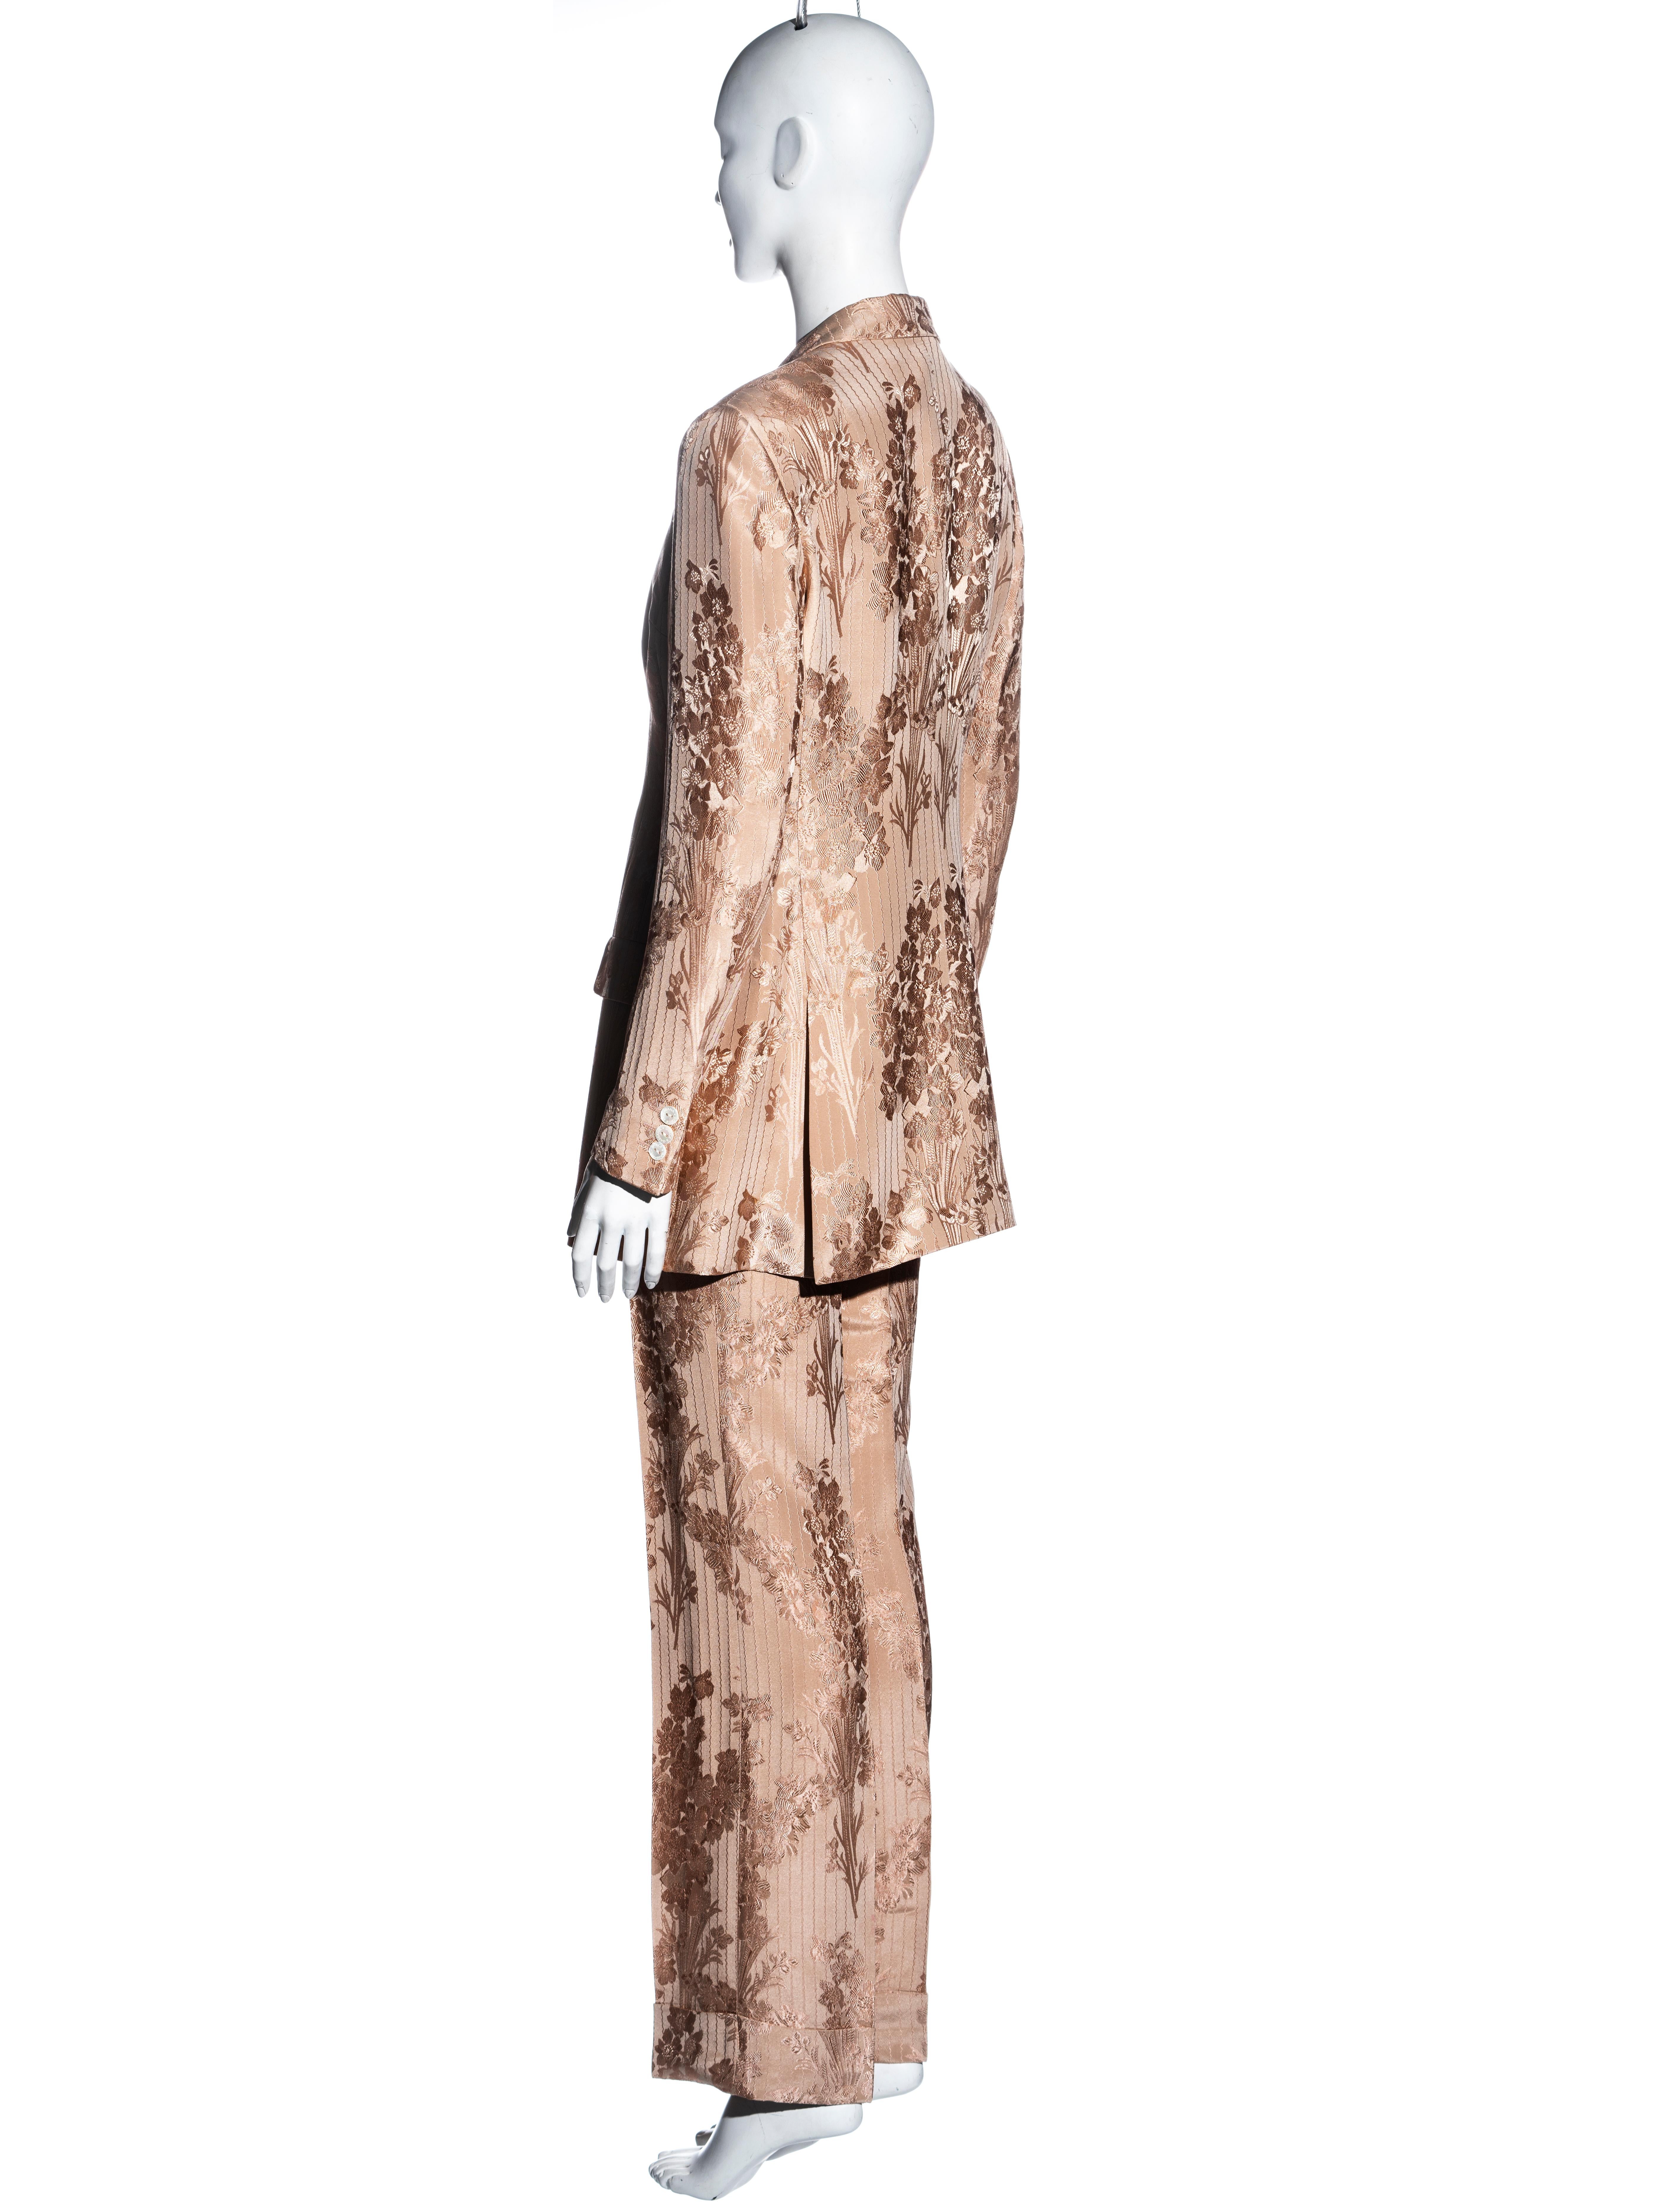 Women's Dolce & Gabbana silk viscose floral brocade pant suit, ss 1997